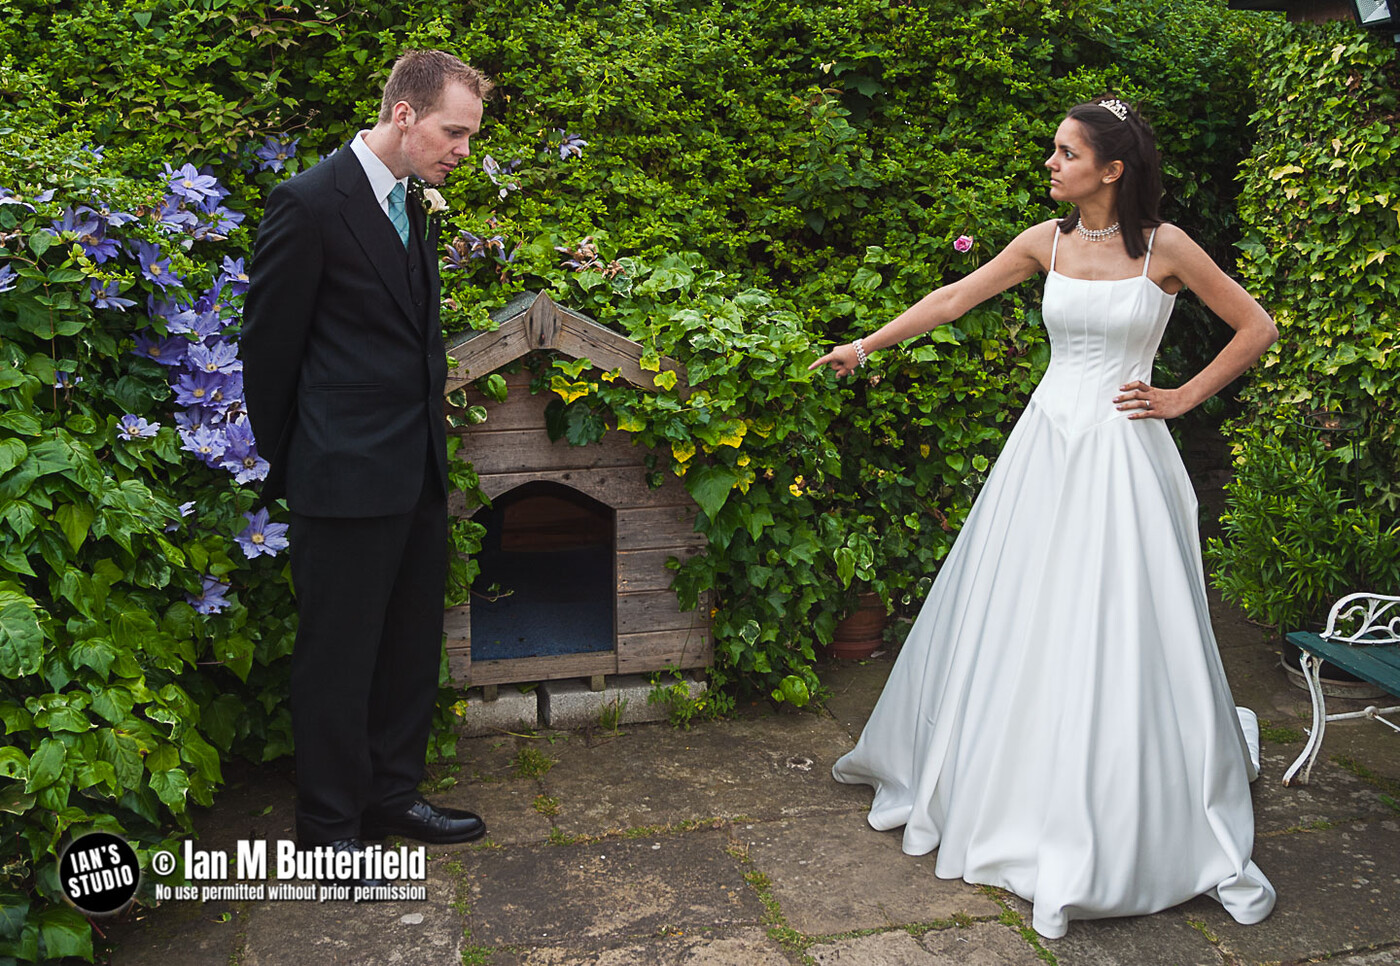 photographer ianbutty wedding  photo taken at Stockport